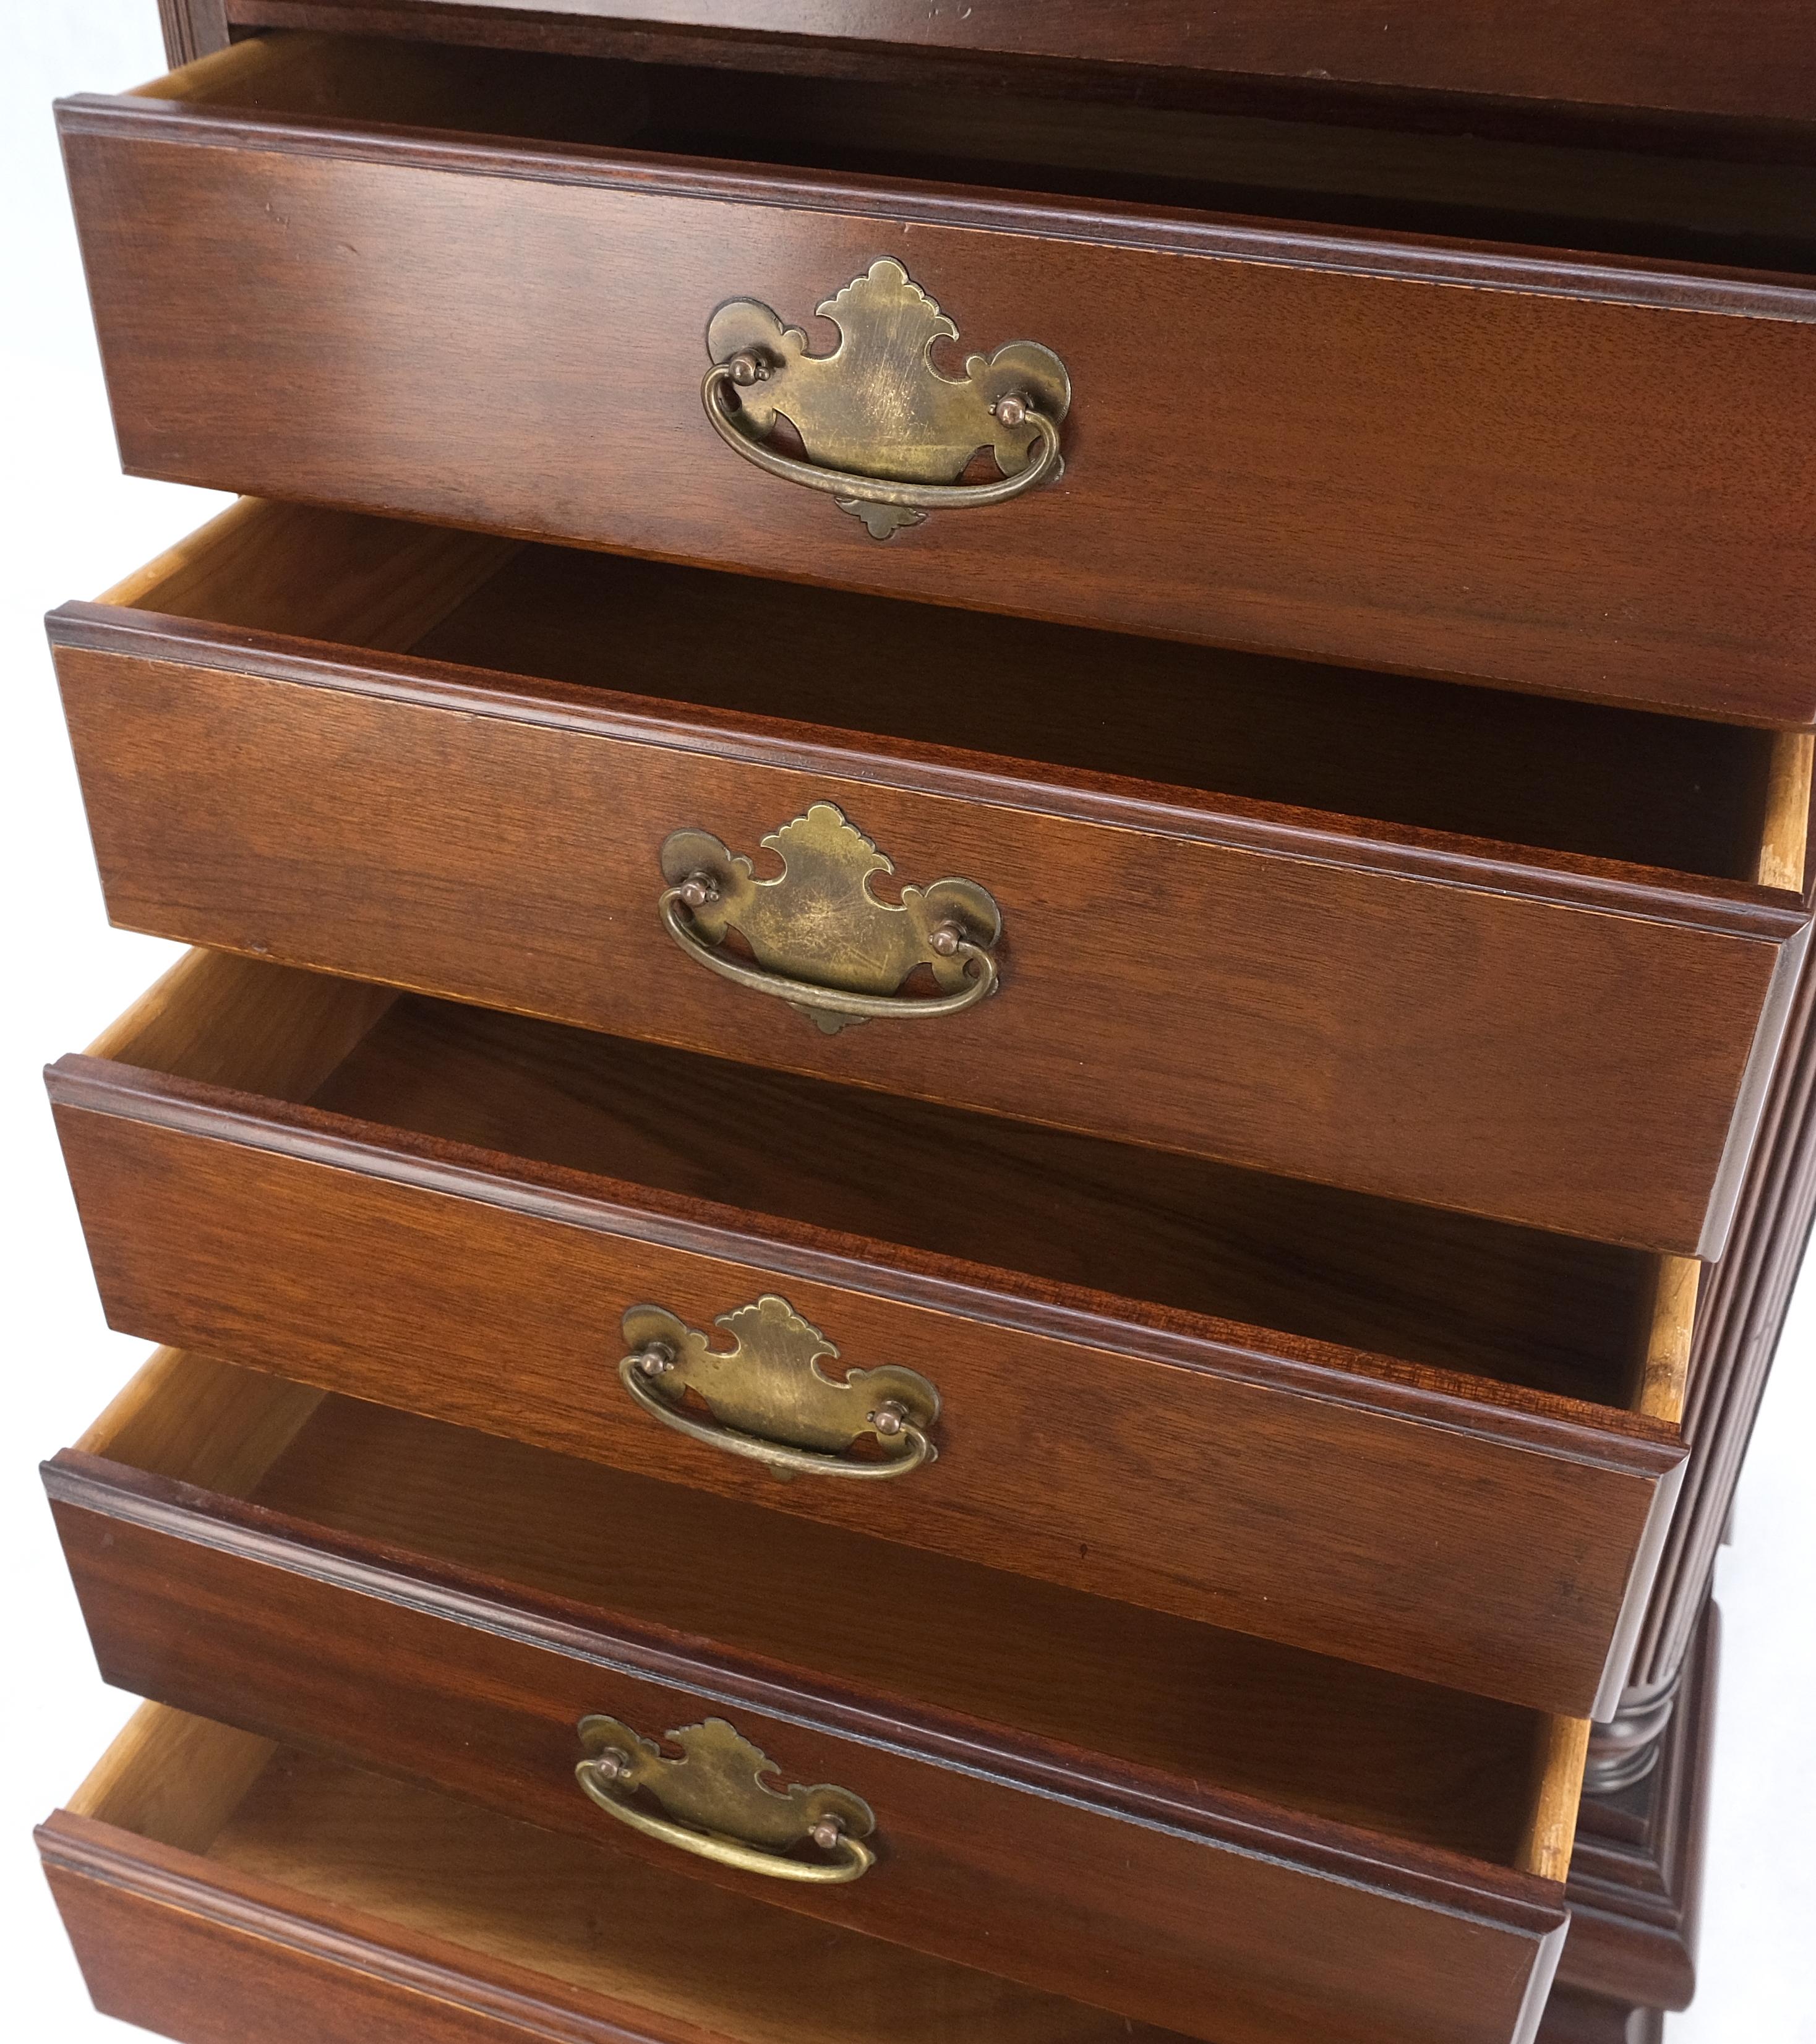 Bracket feet mahogany 6 drawers brass pulls tall lingerie chest dresser cabinet.